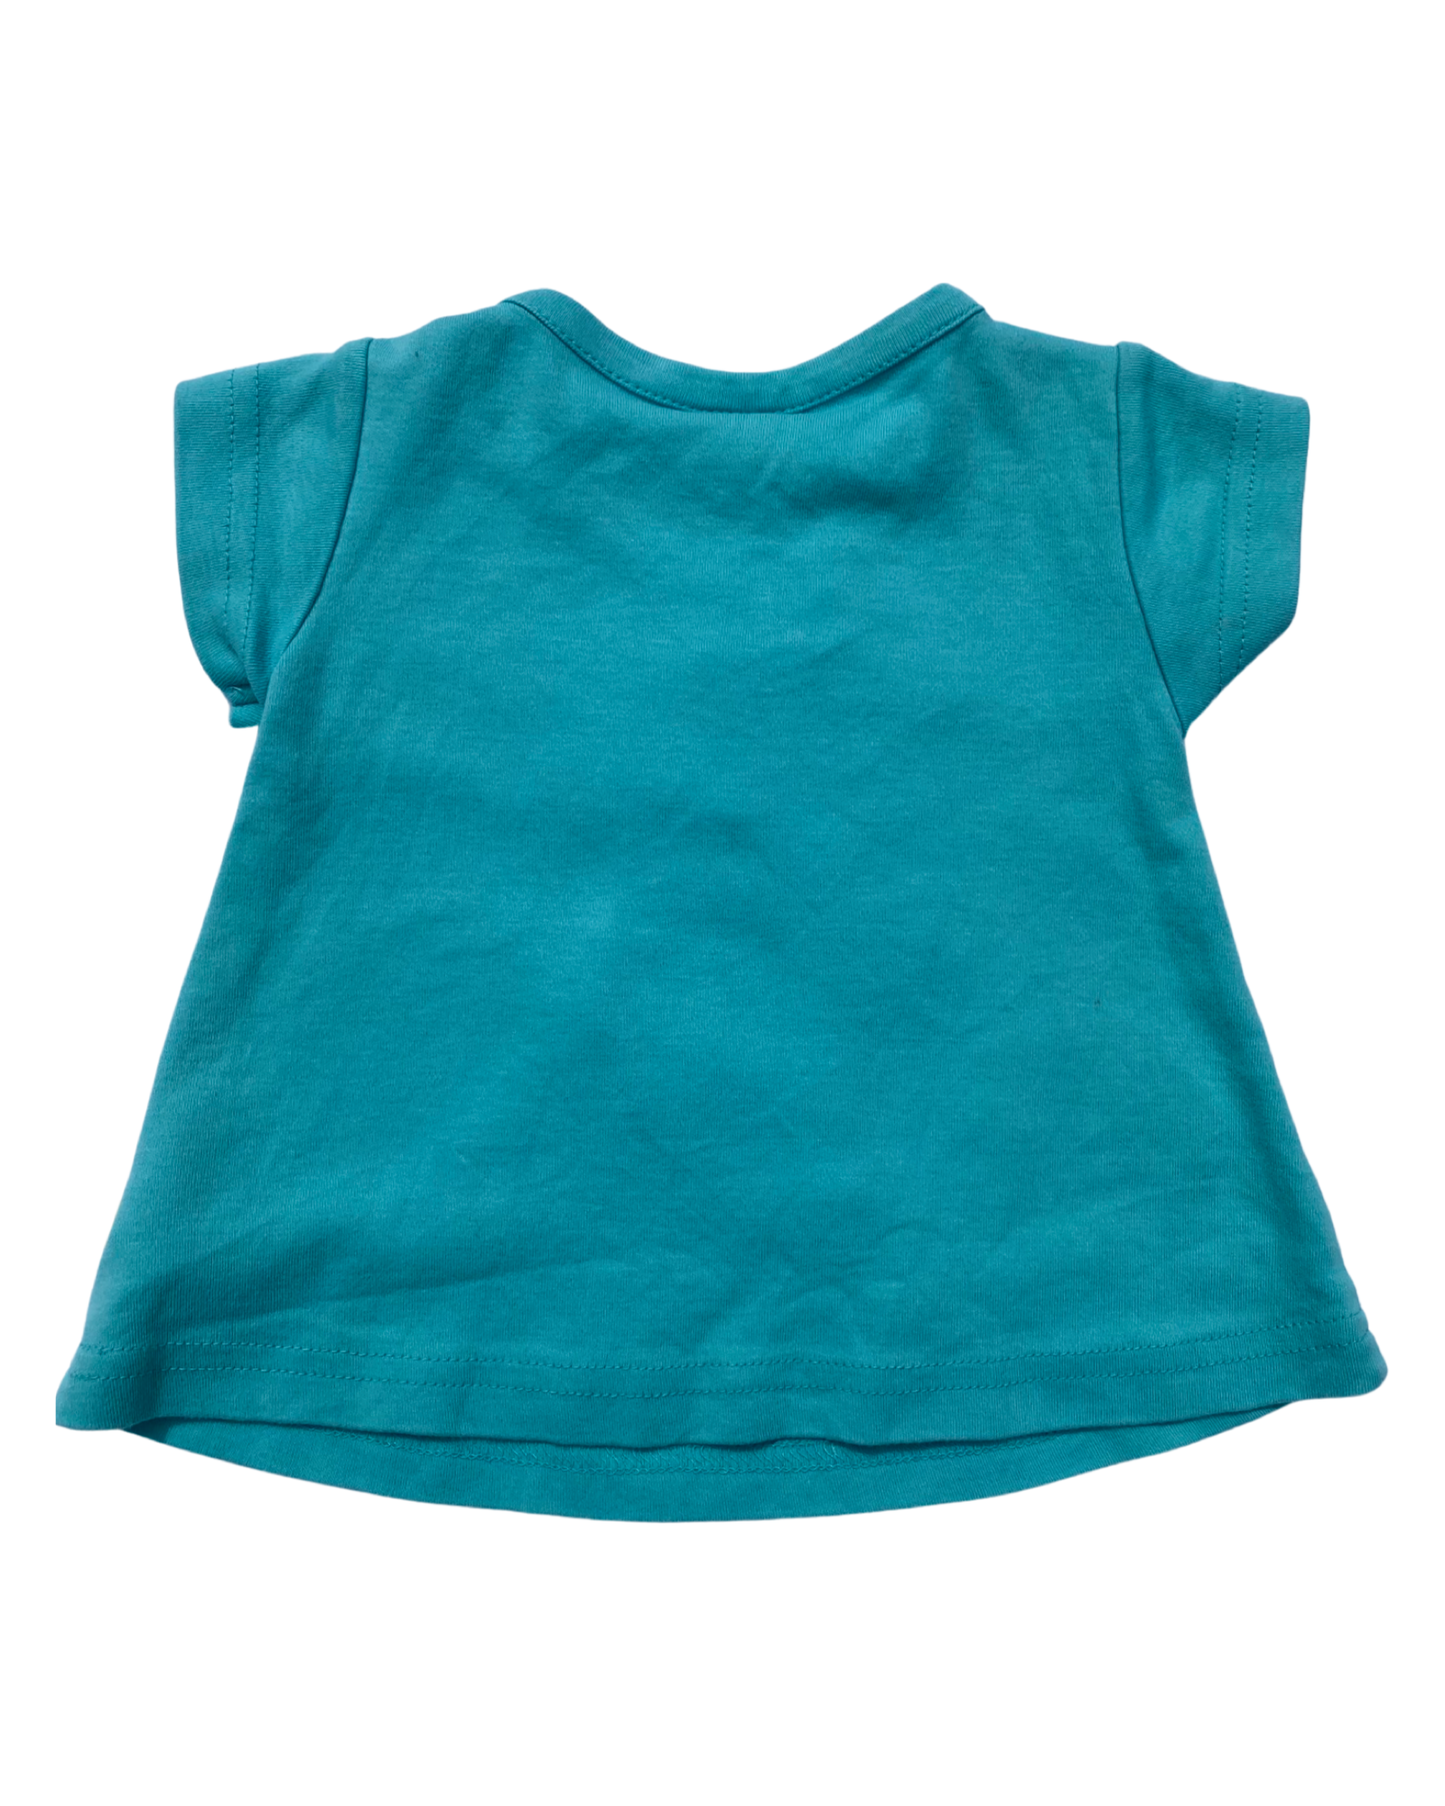 Frugi appliqué baby t shirt (size 0-3mths)